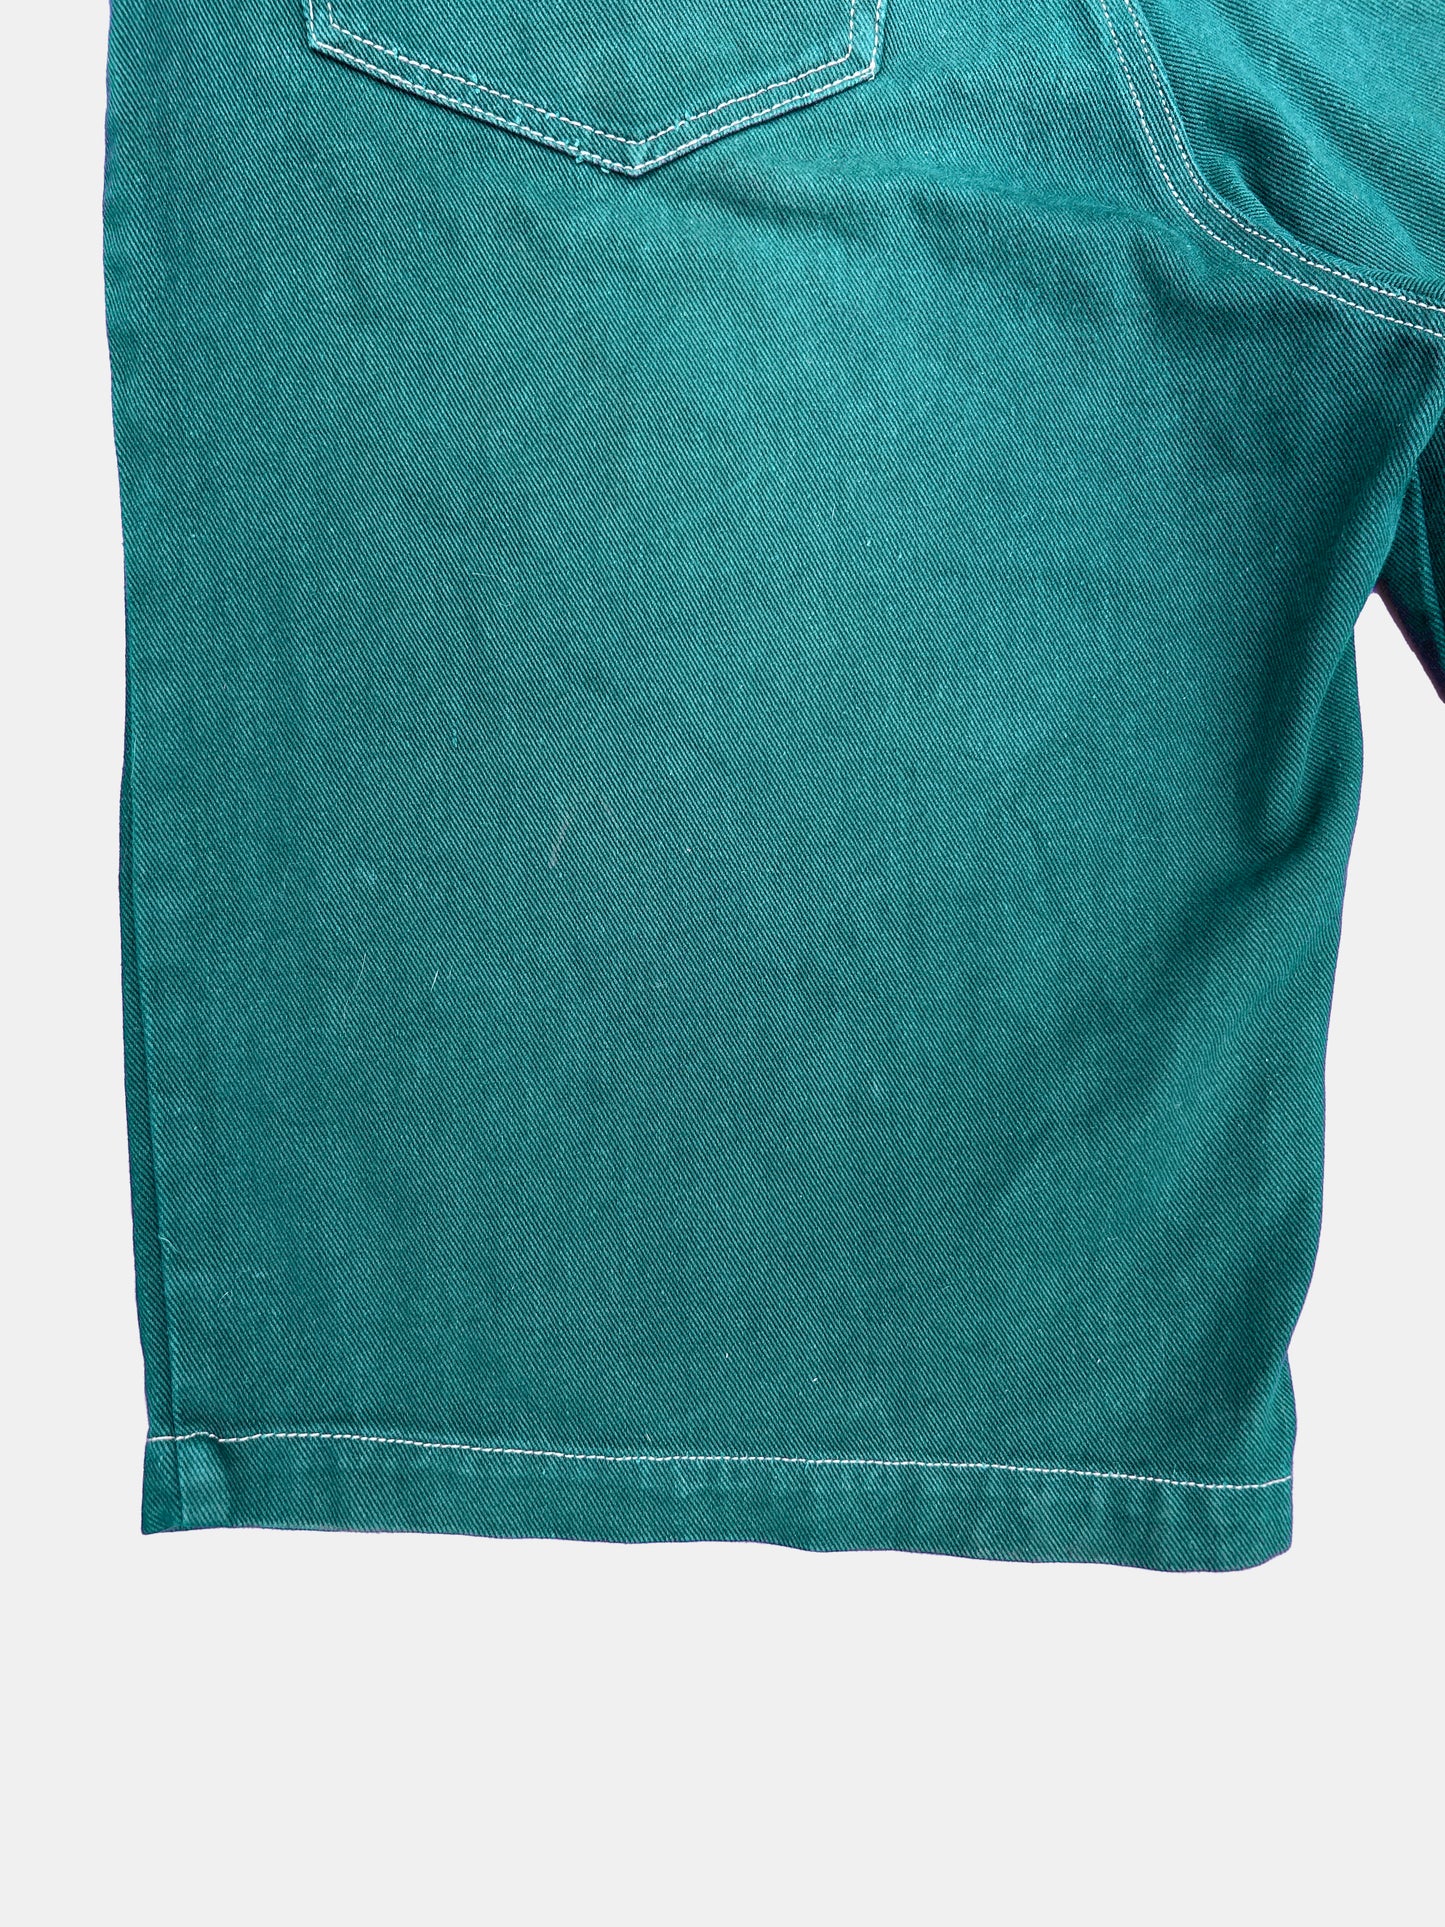 [revolution] emerald-wash baggy jorts